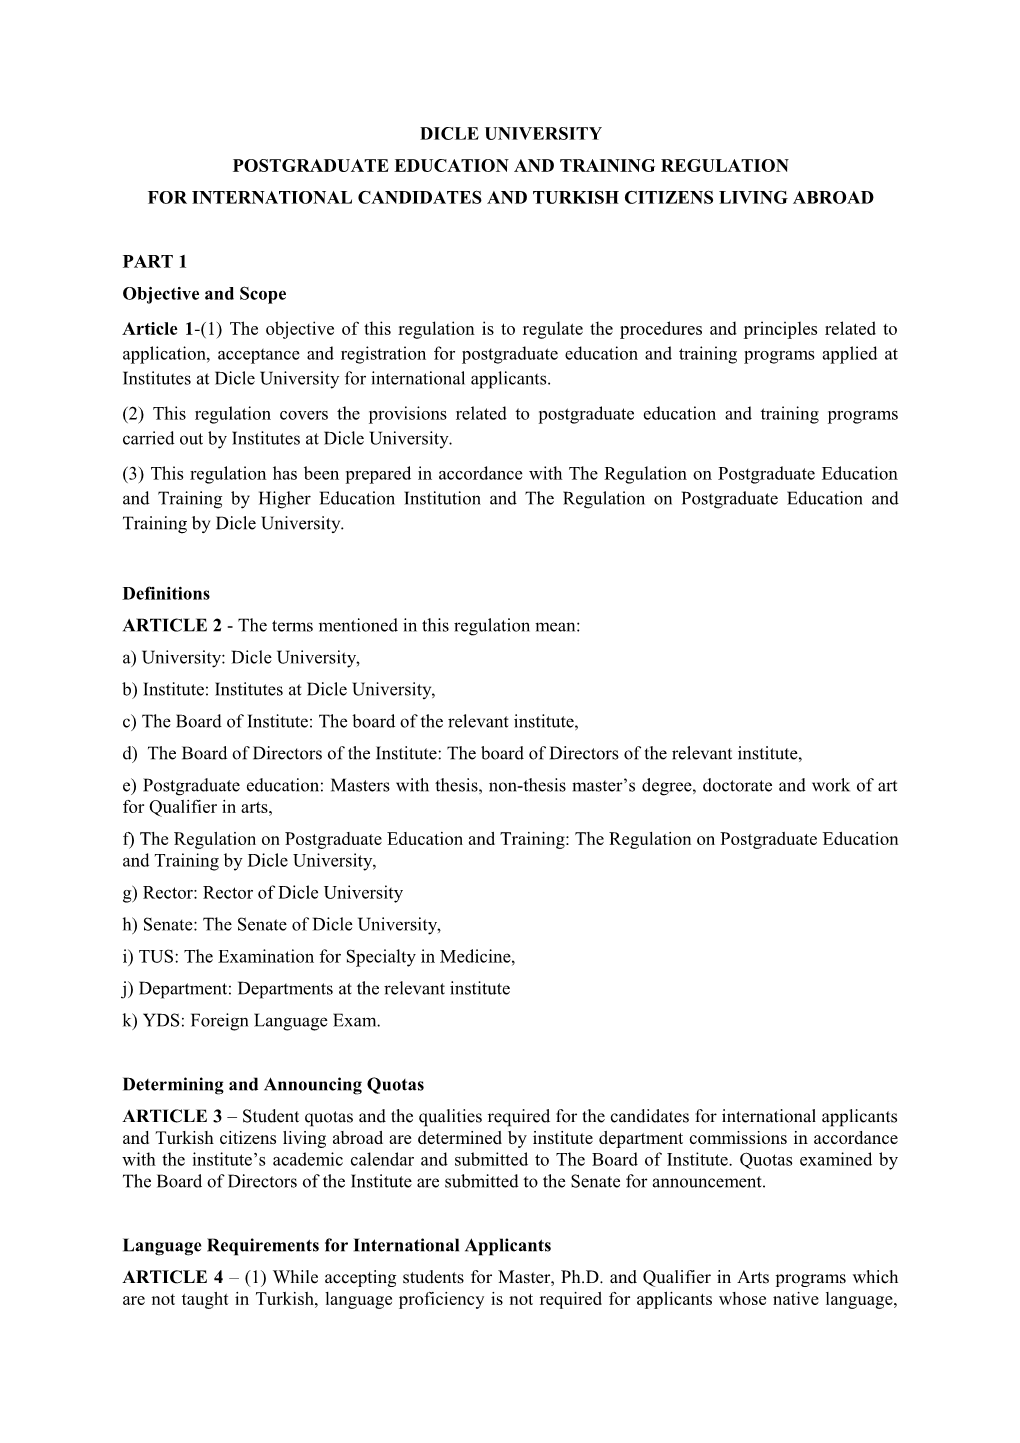 Postgraduate Education and Training Regulation